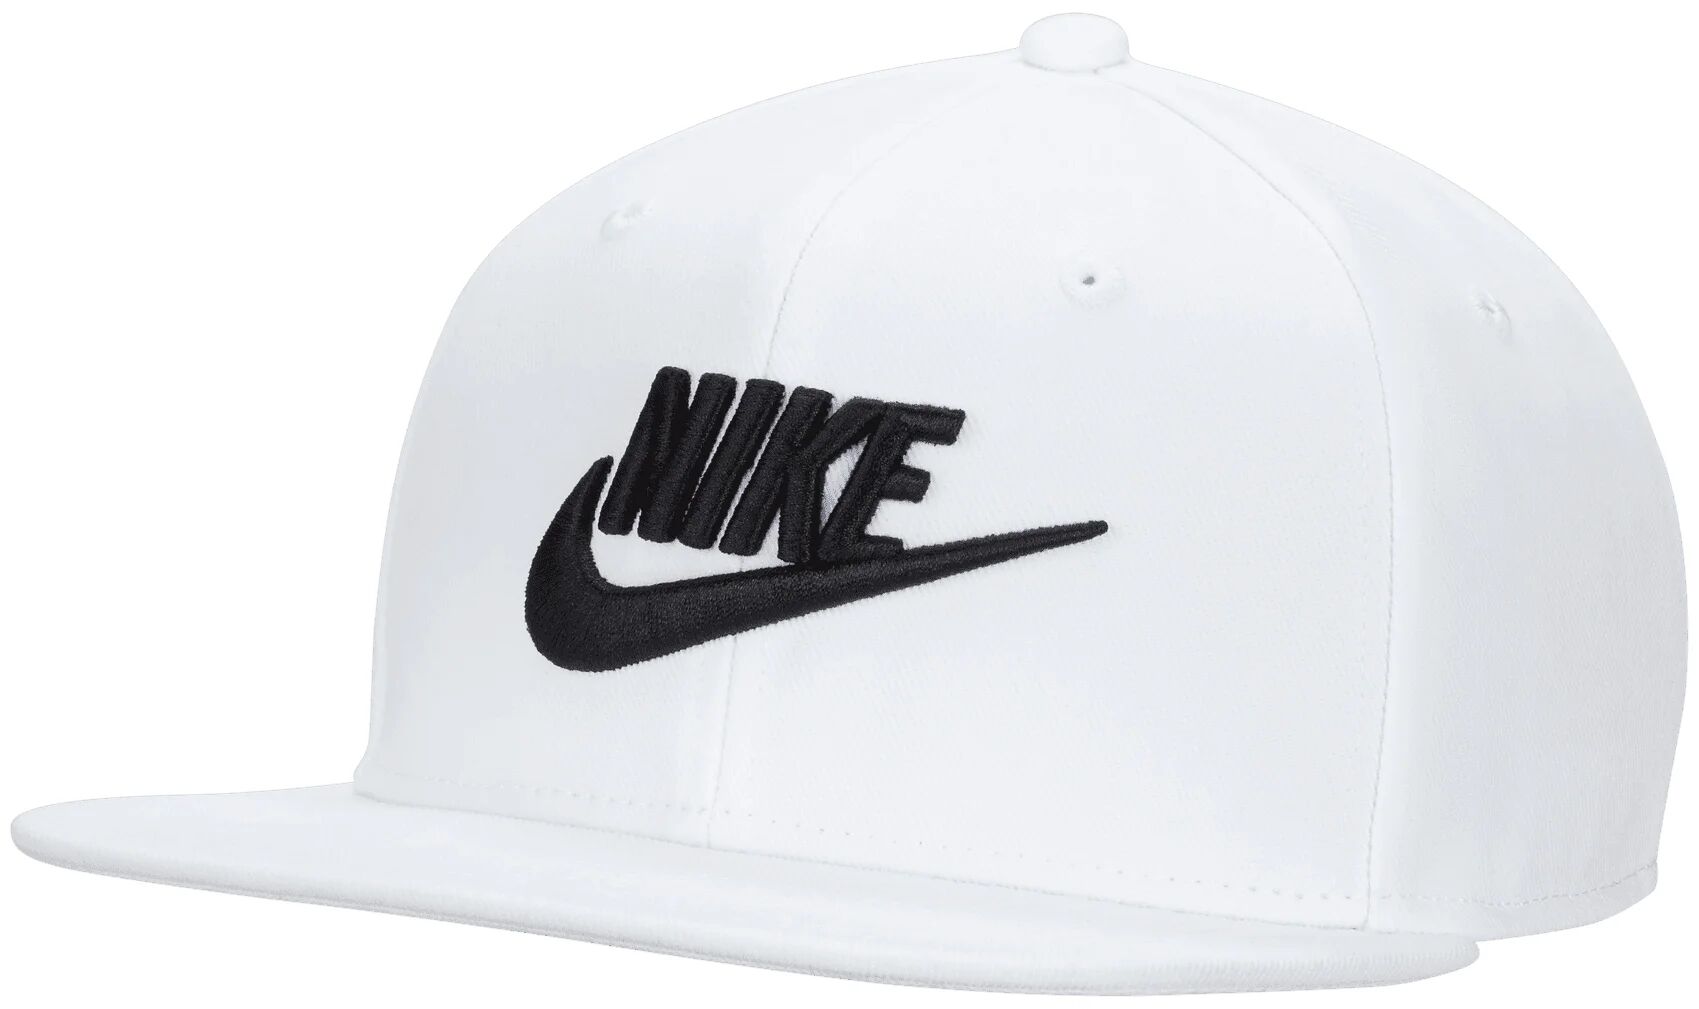 Nike Dri-FIT Pro Structured Futura Men's Golf Hat - White, Size: Large/X-Large